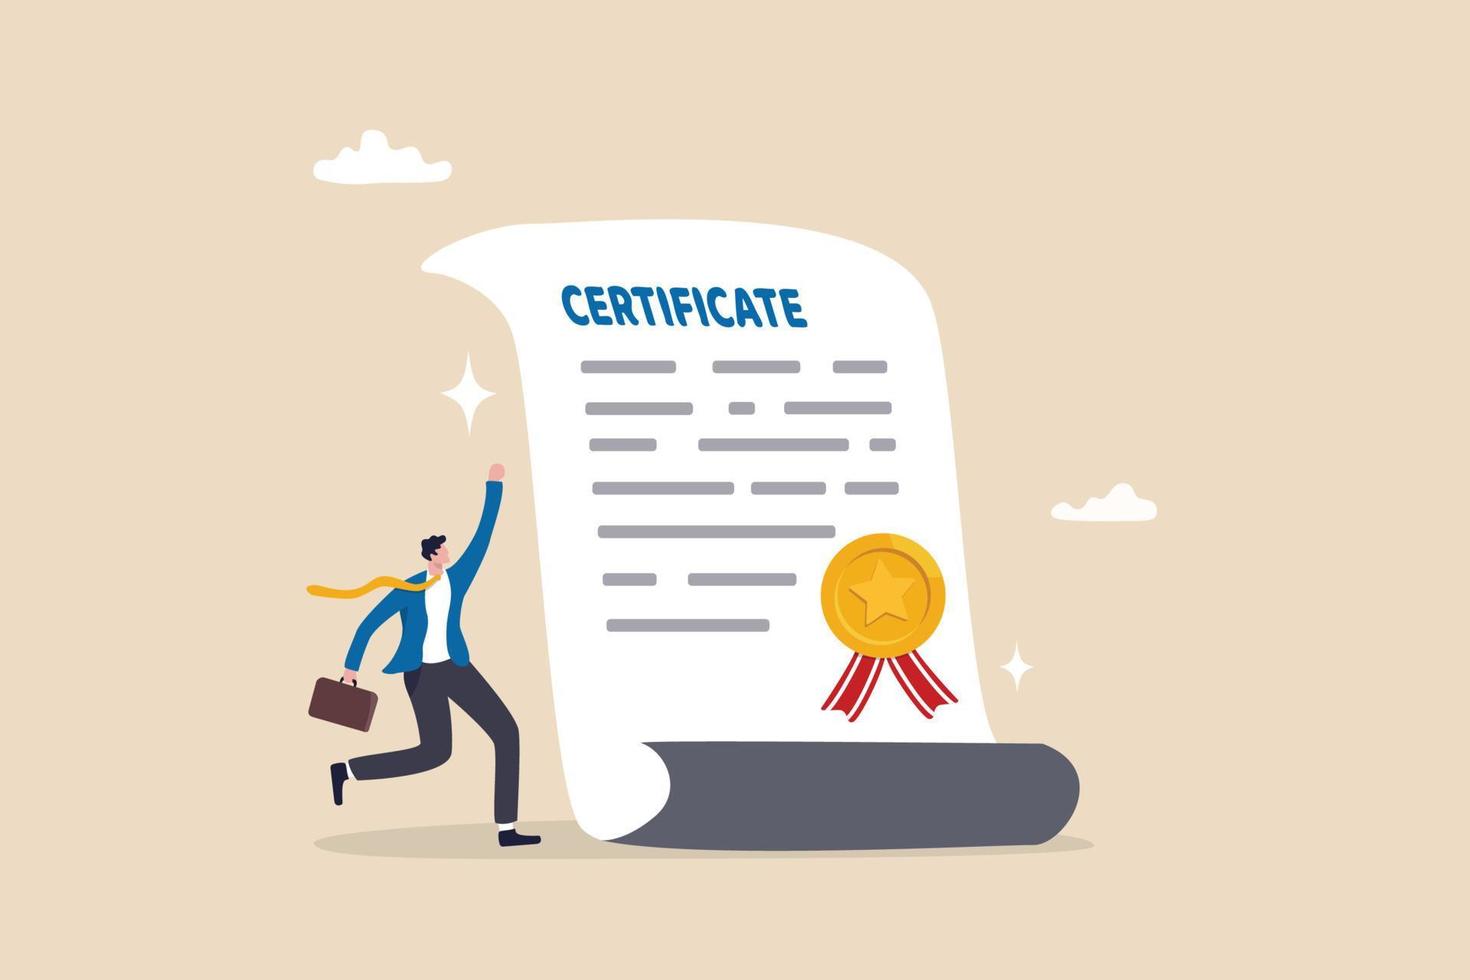 certificado en tomando curso, premio para excelente trabajo o diploma documento, licencia sello o educación certificado garantizar concepto, contento empresario con estrella certificado papel para trabajo logro. vector